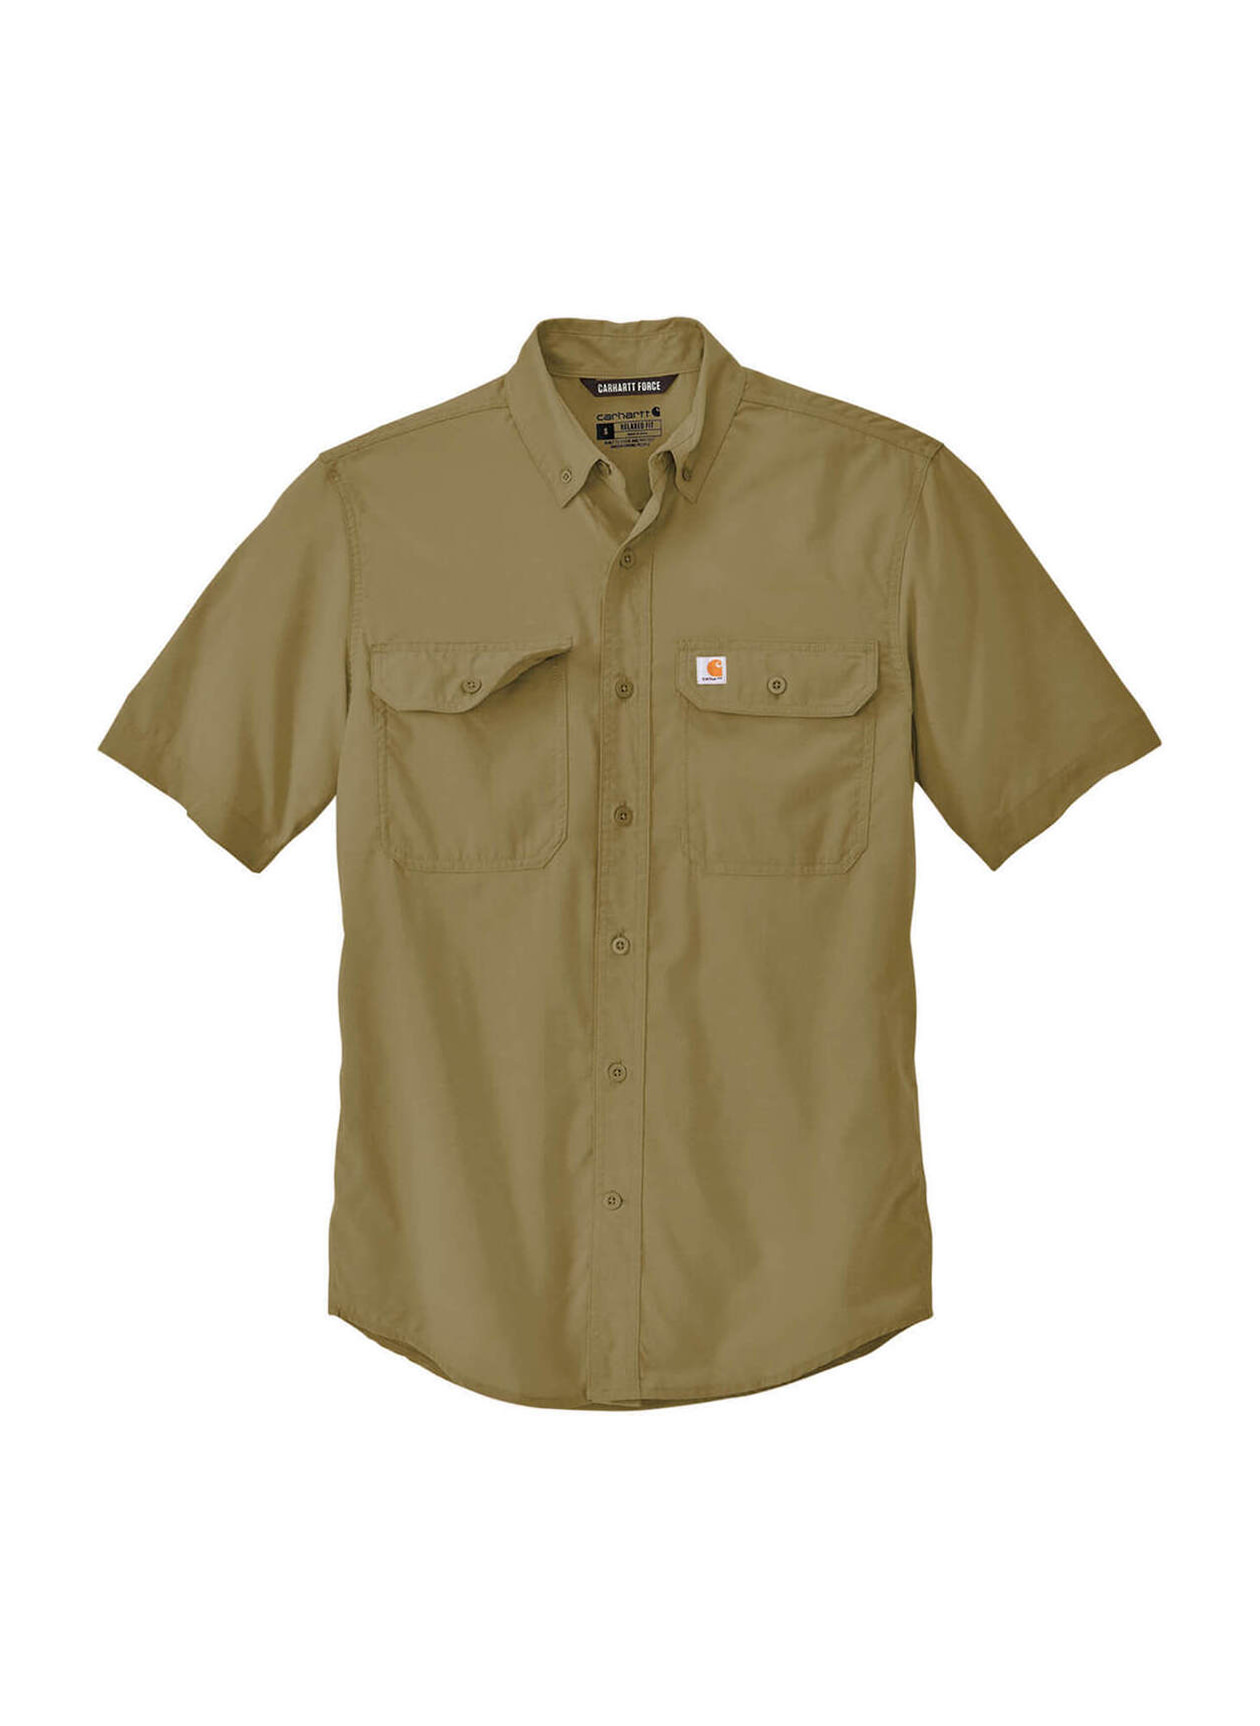 Carhartt Men's Dark Khaki Force Solid Short-Sleeve Shirt